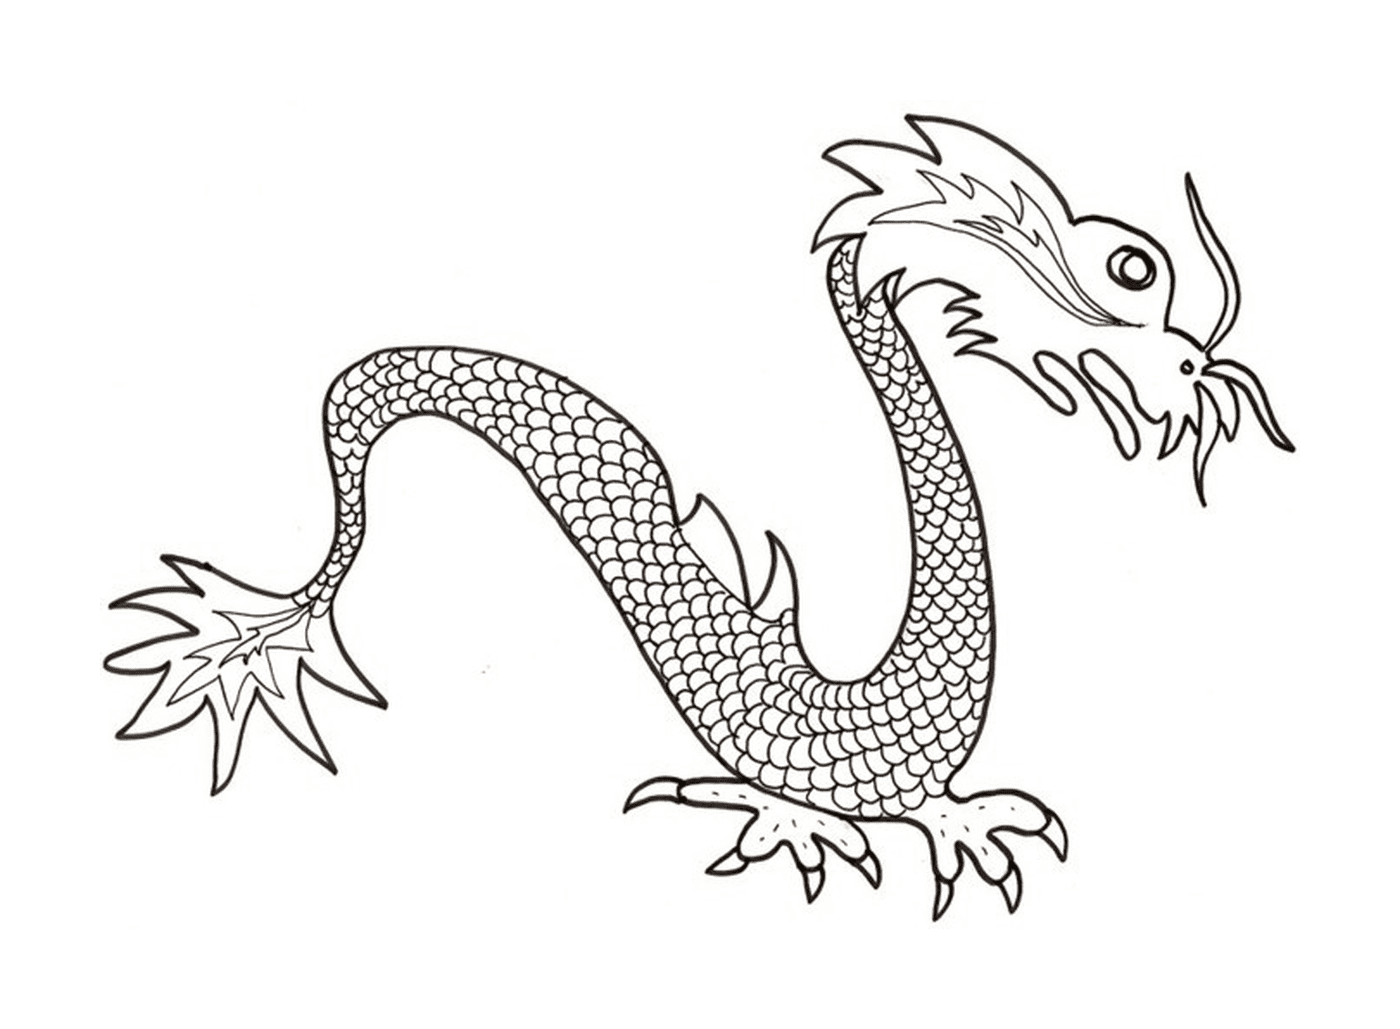  सरल तथा सुन्दर चीनी ड्रैगन 